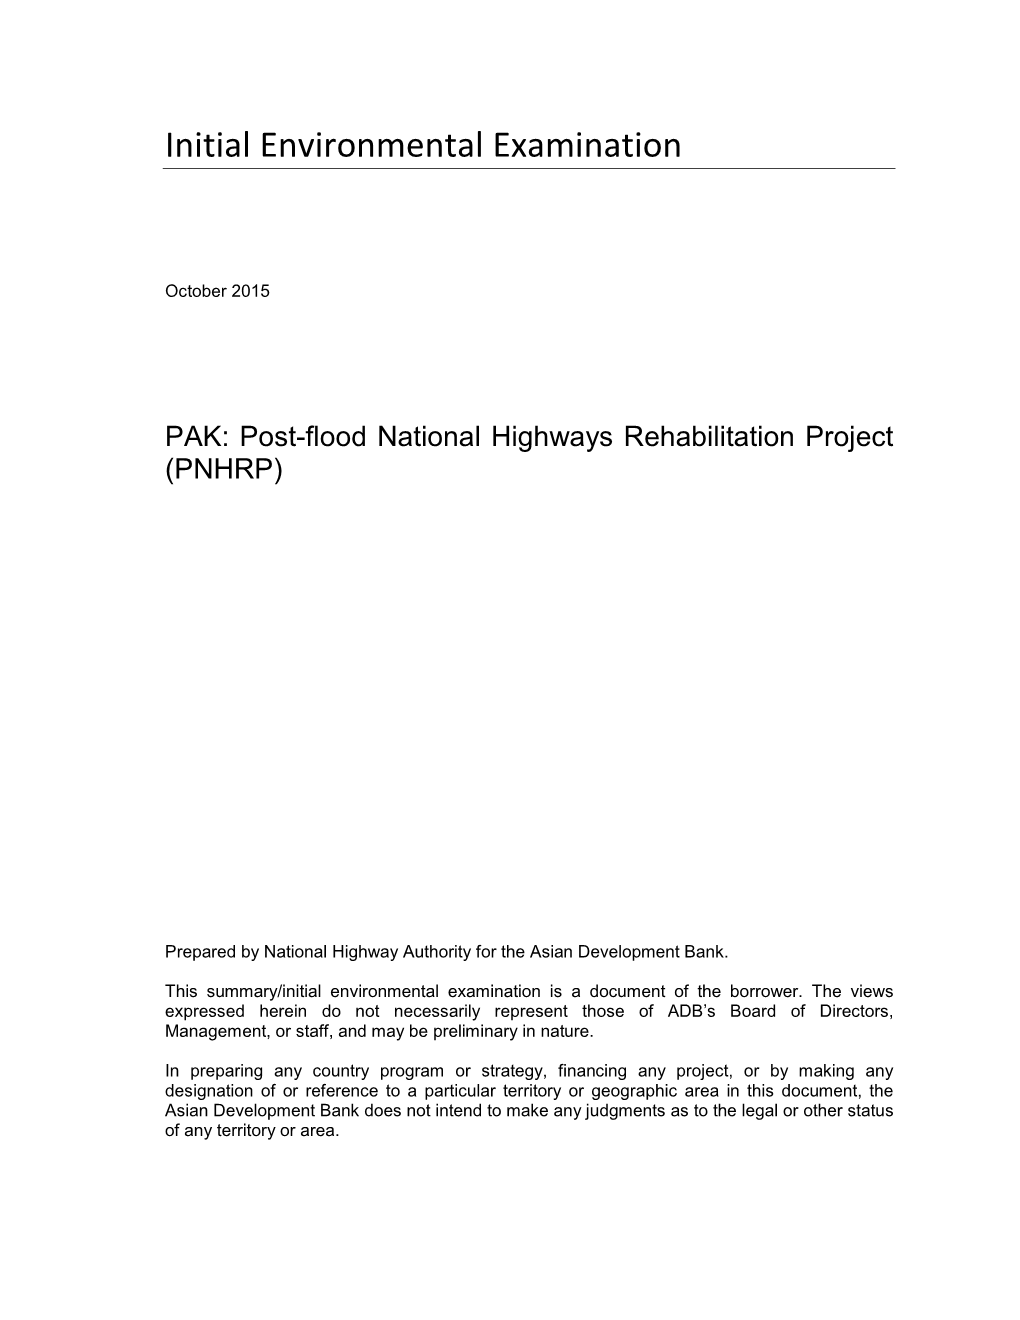 49191-001: Post-Flood National Highways Rehabilitation Project